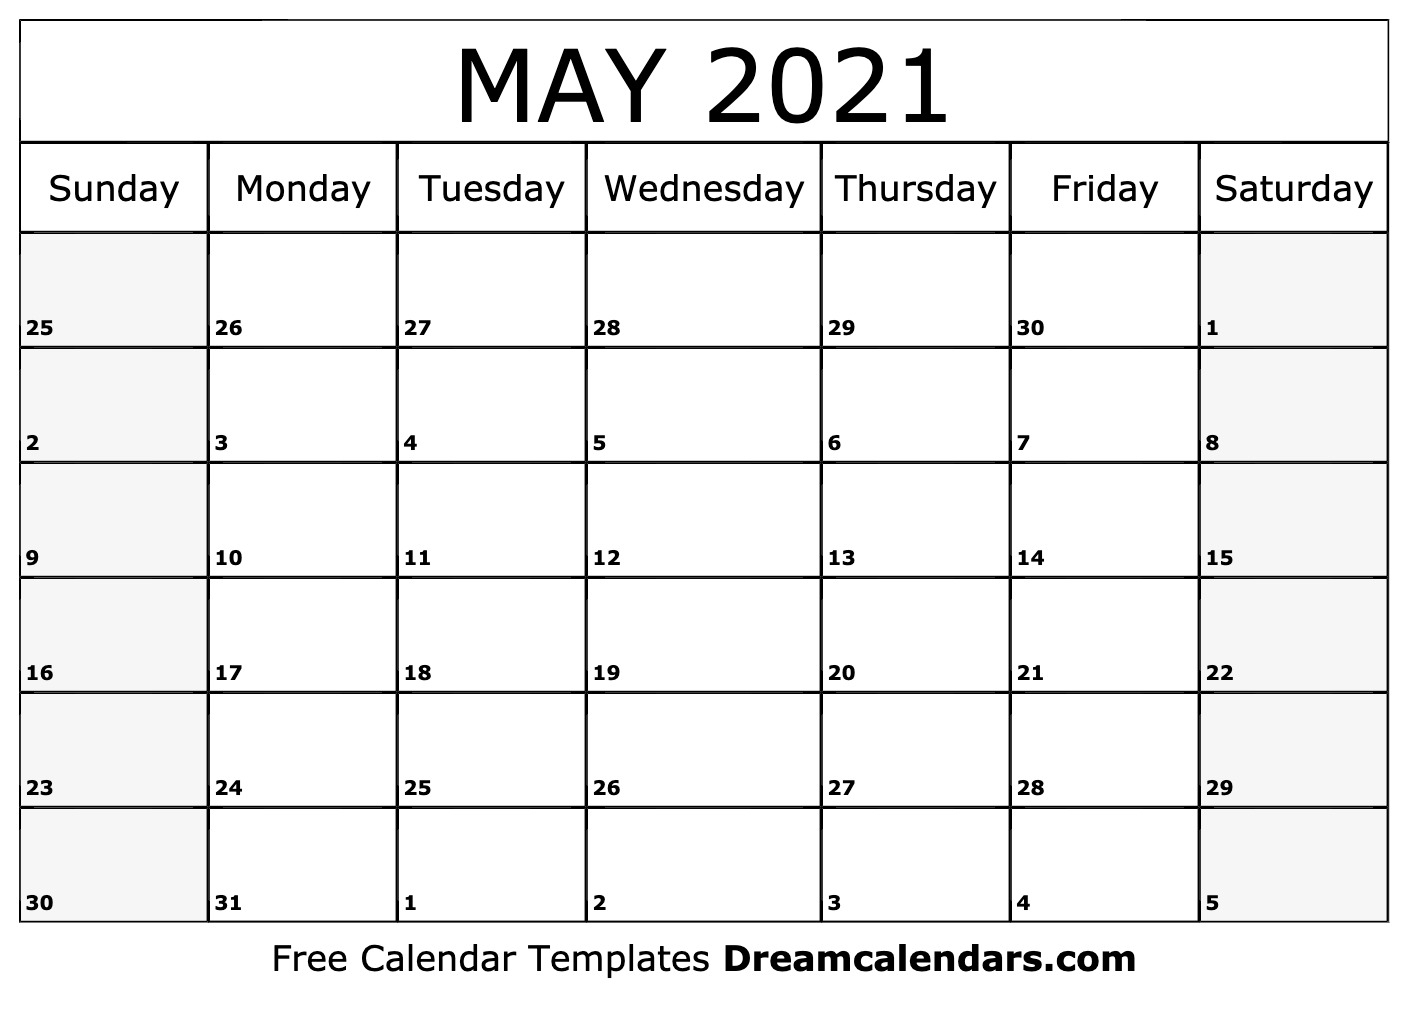 may 2021 calendar free blank printable templates